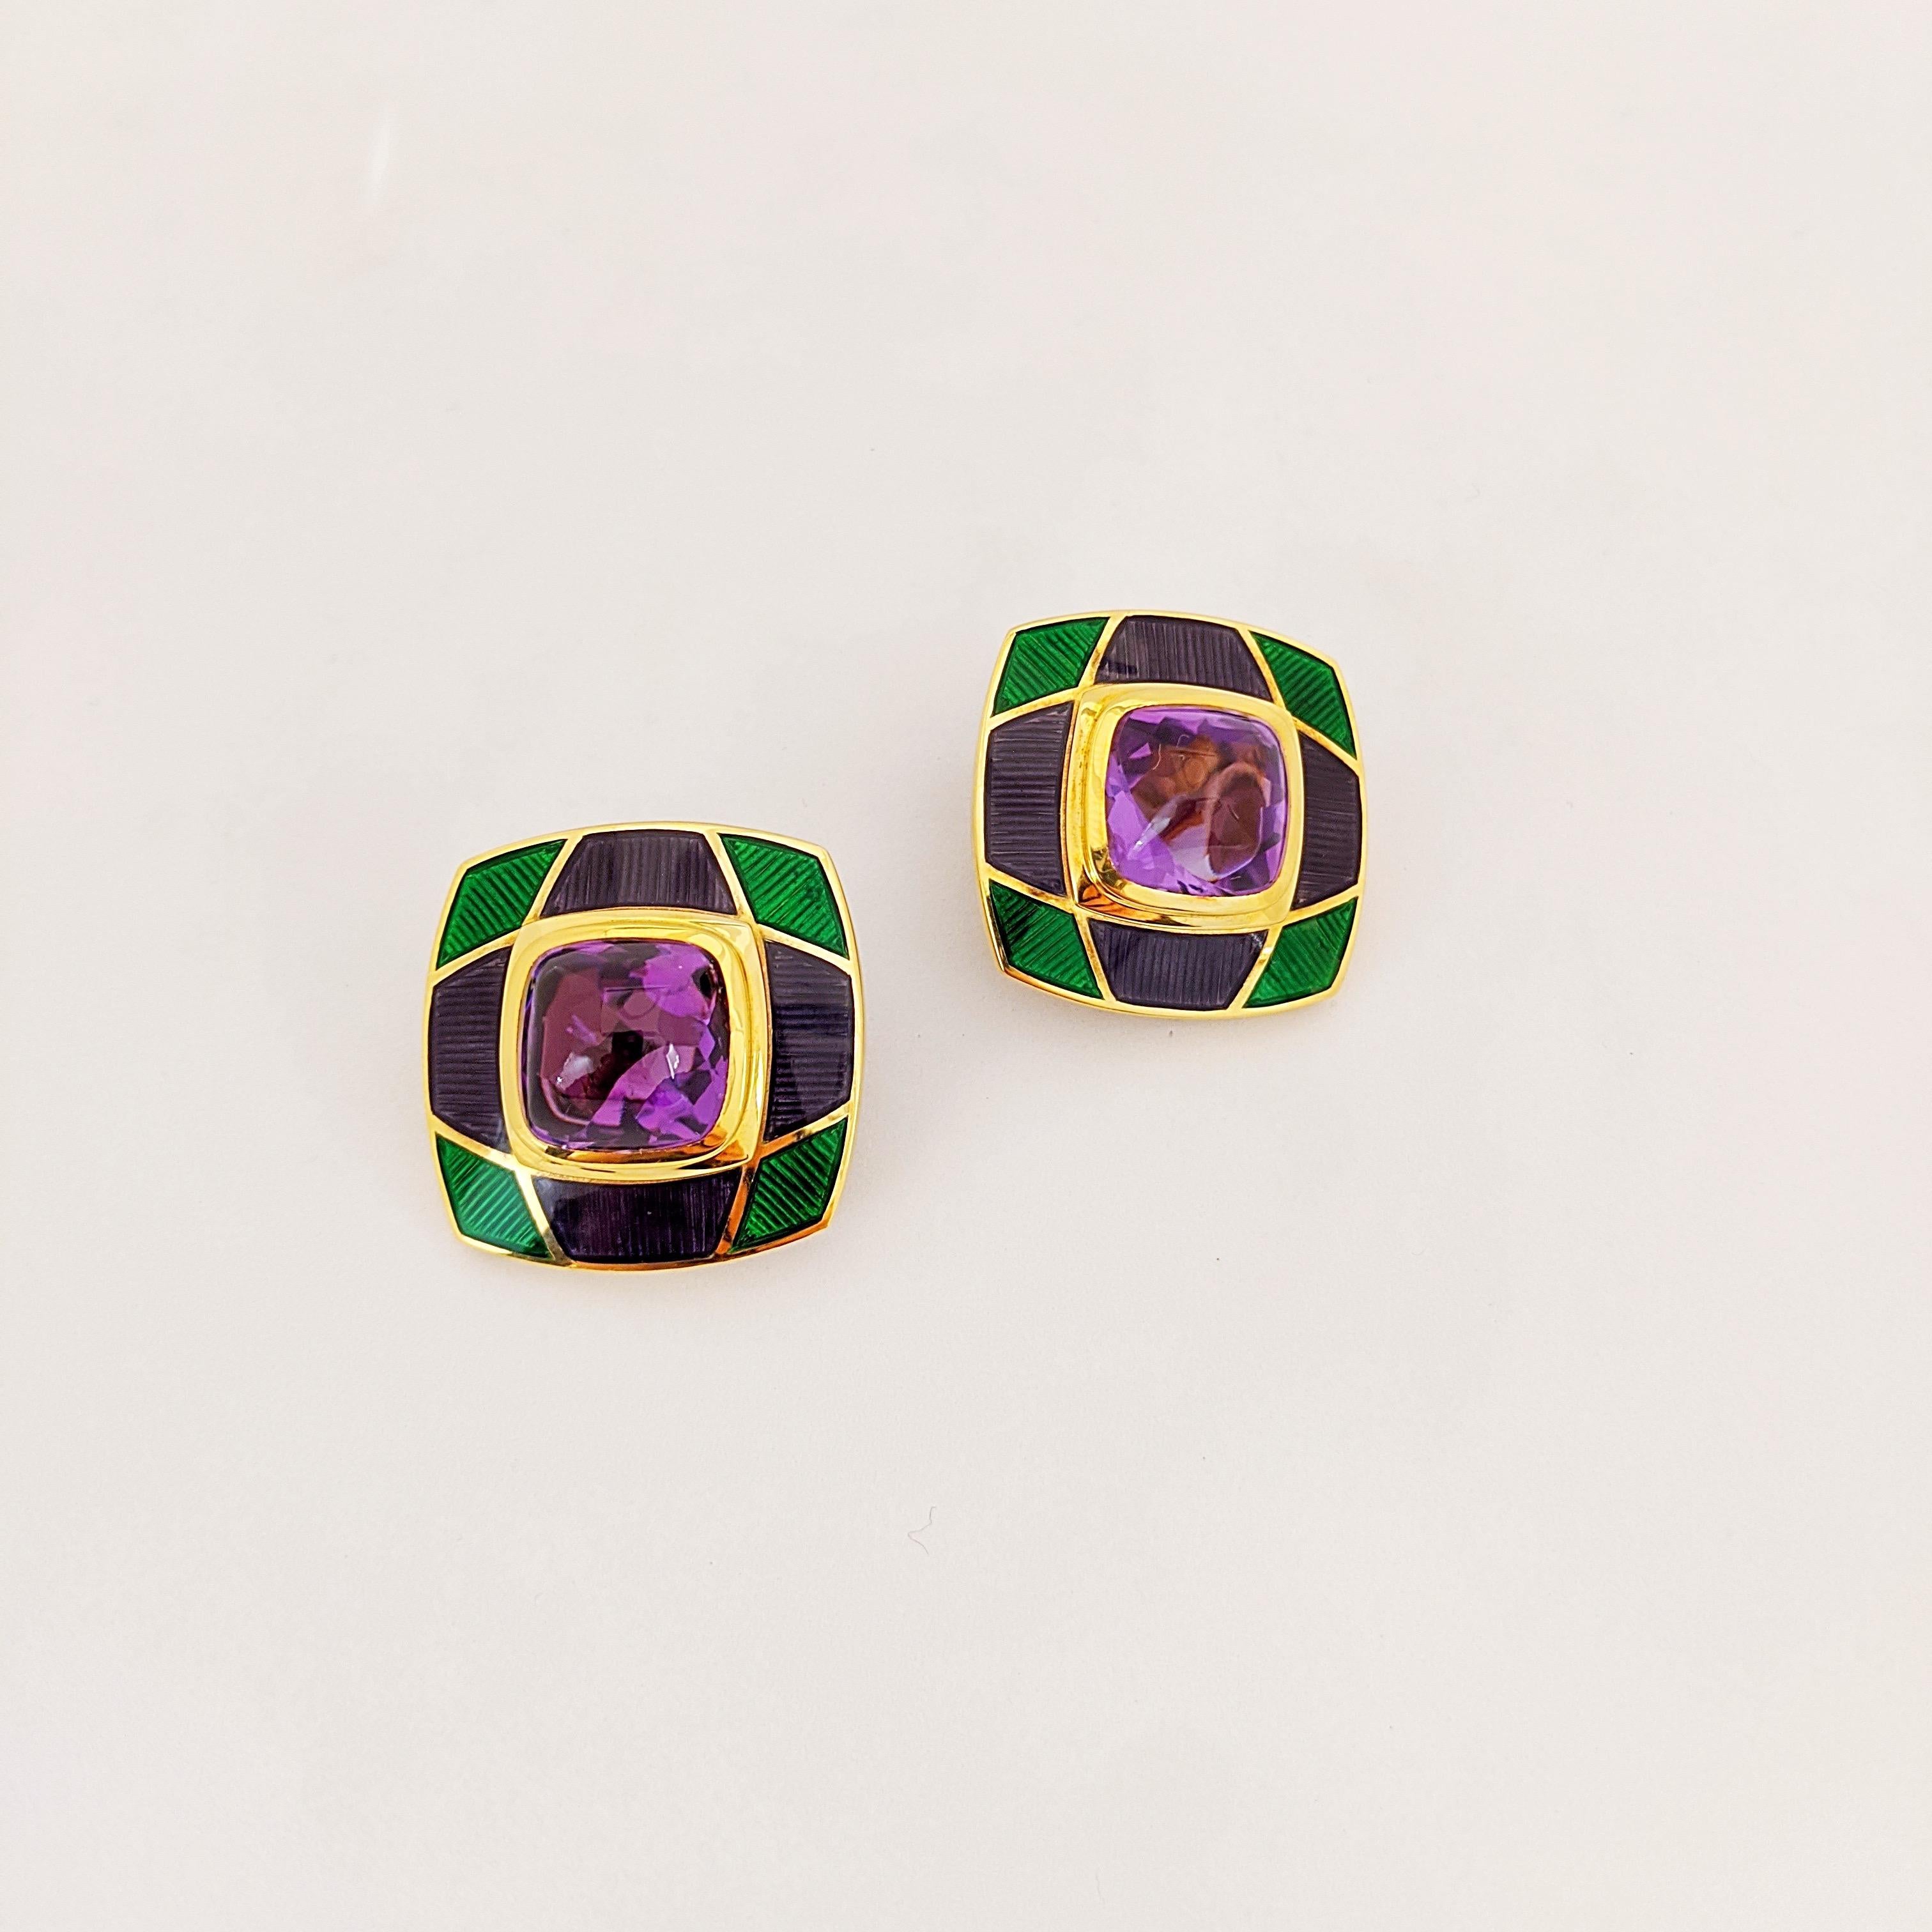 purple and green earrings